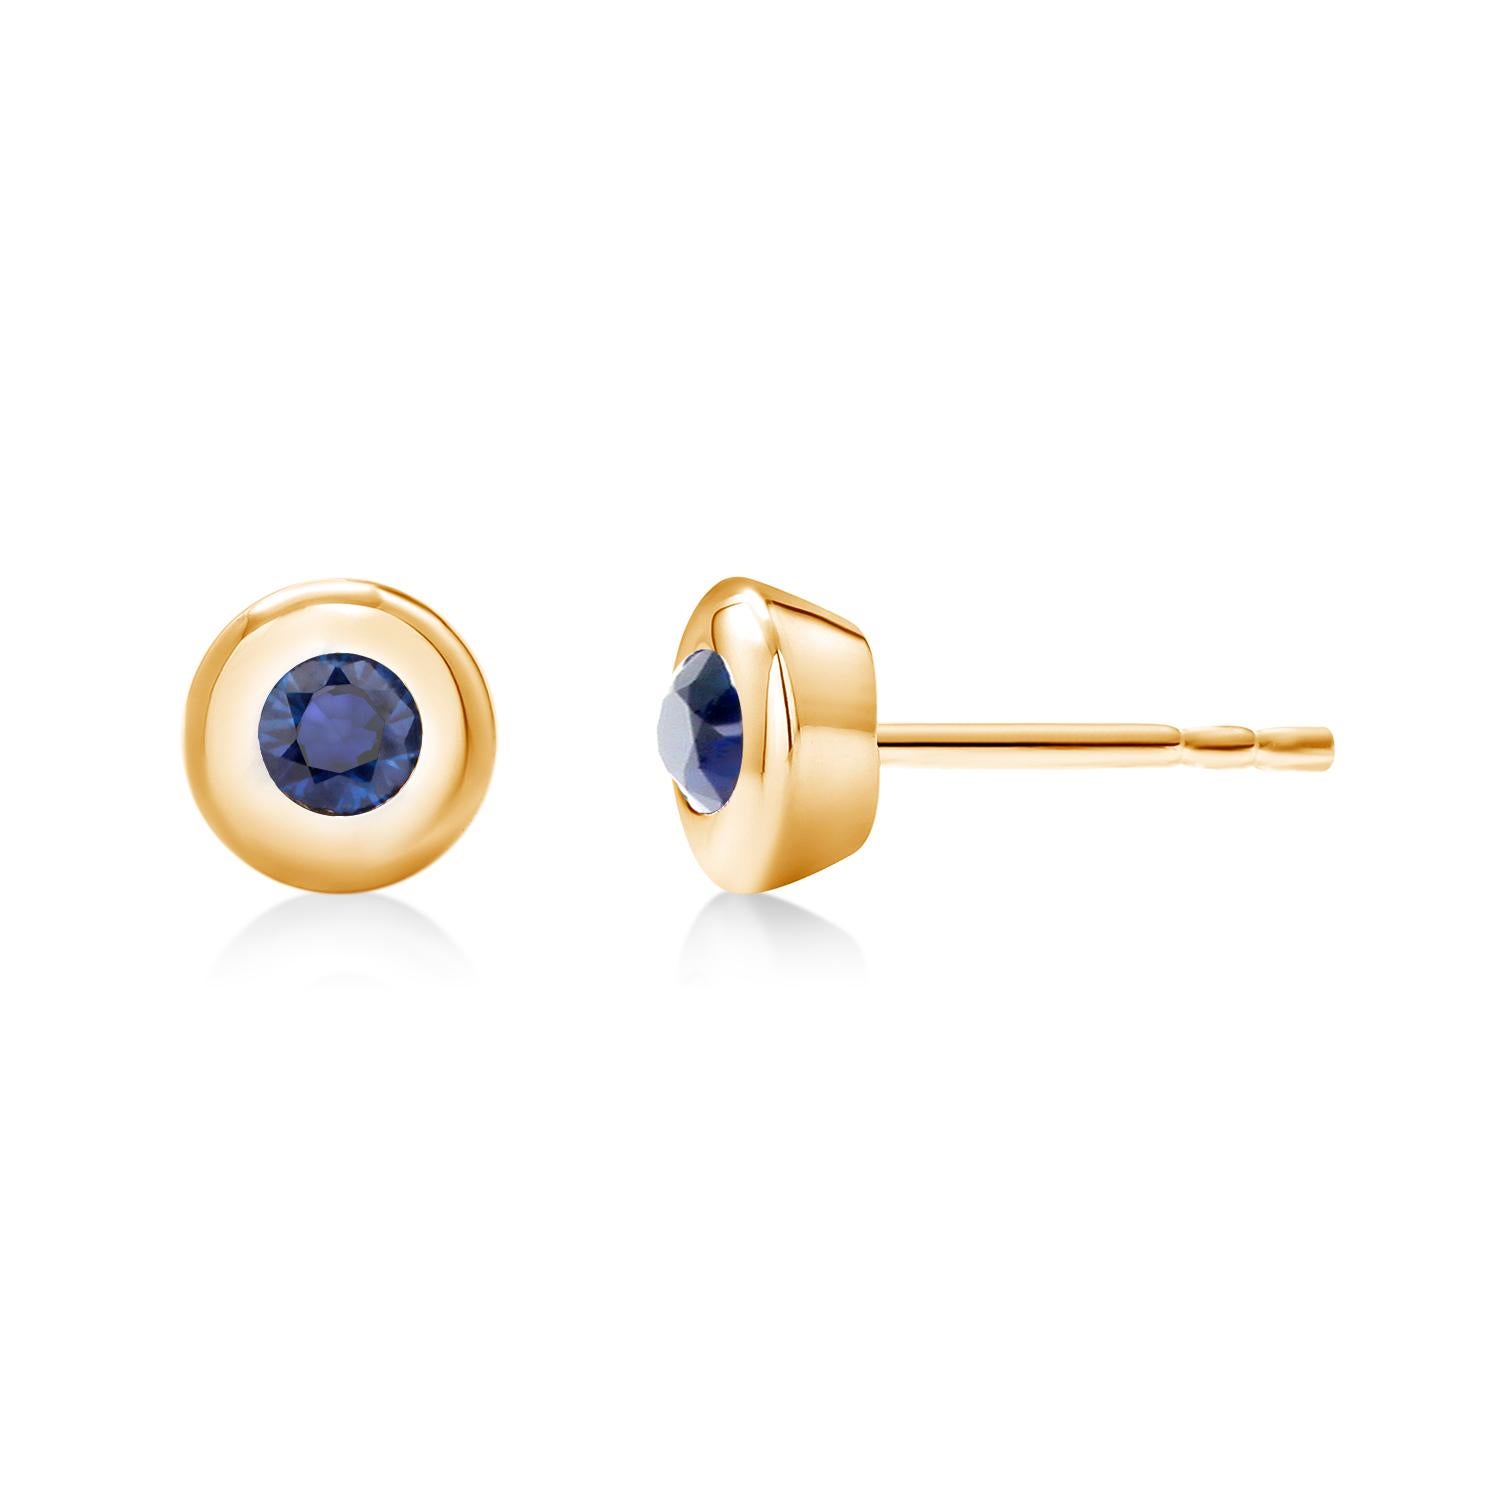 Round Cut Yellow Gold Bezel Set Sapphire Stud Earrings Weighing 0.30 Carat